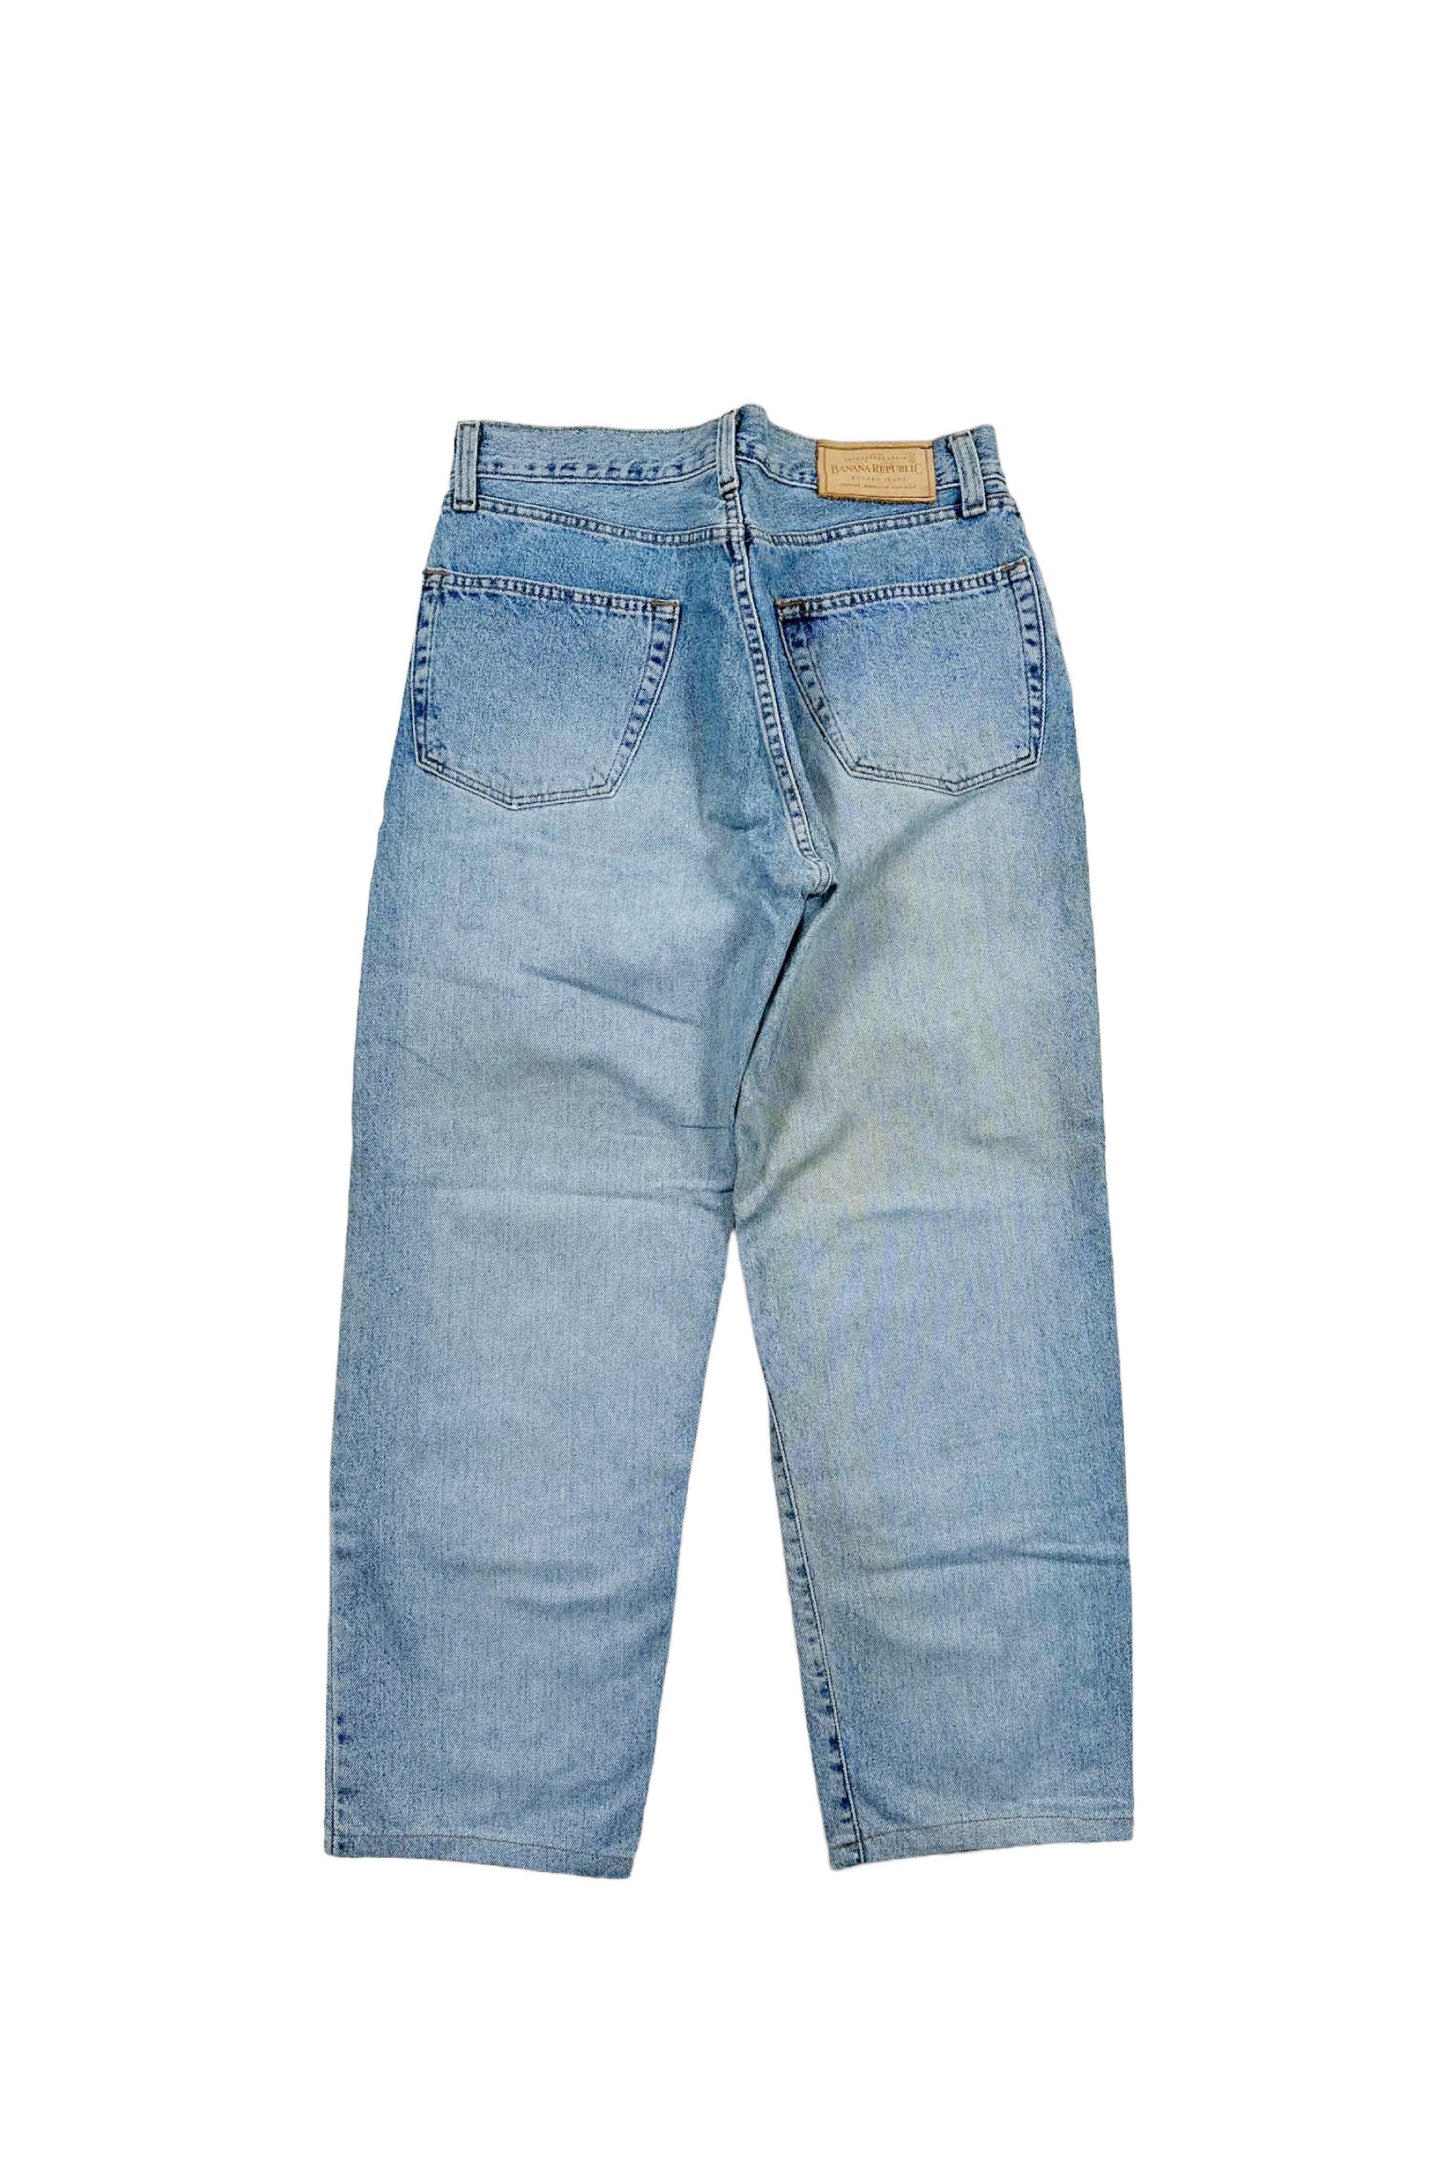 80's 90's Made in USA BANANA REPUBLIC denim pants